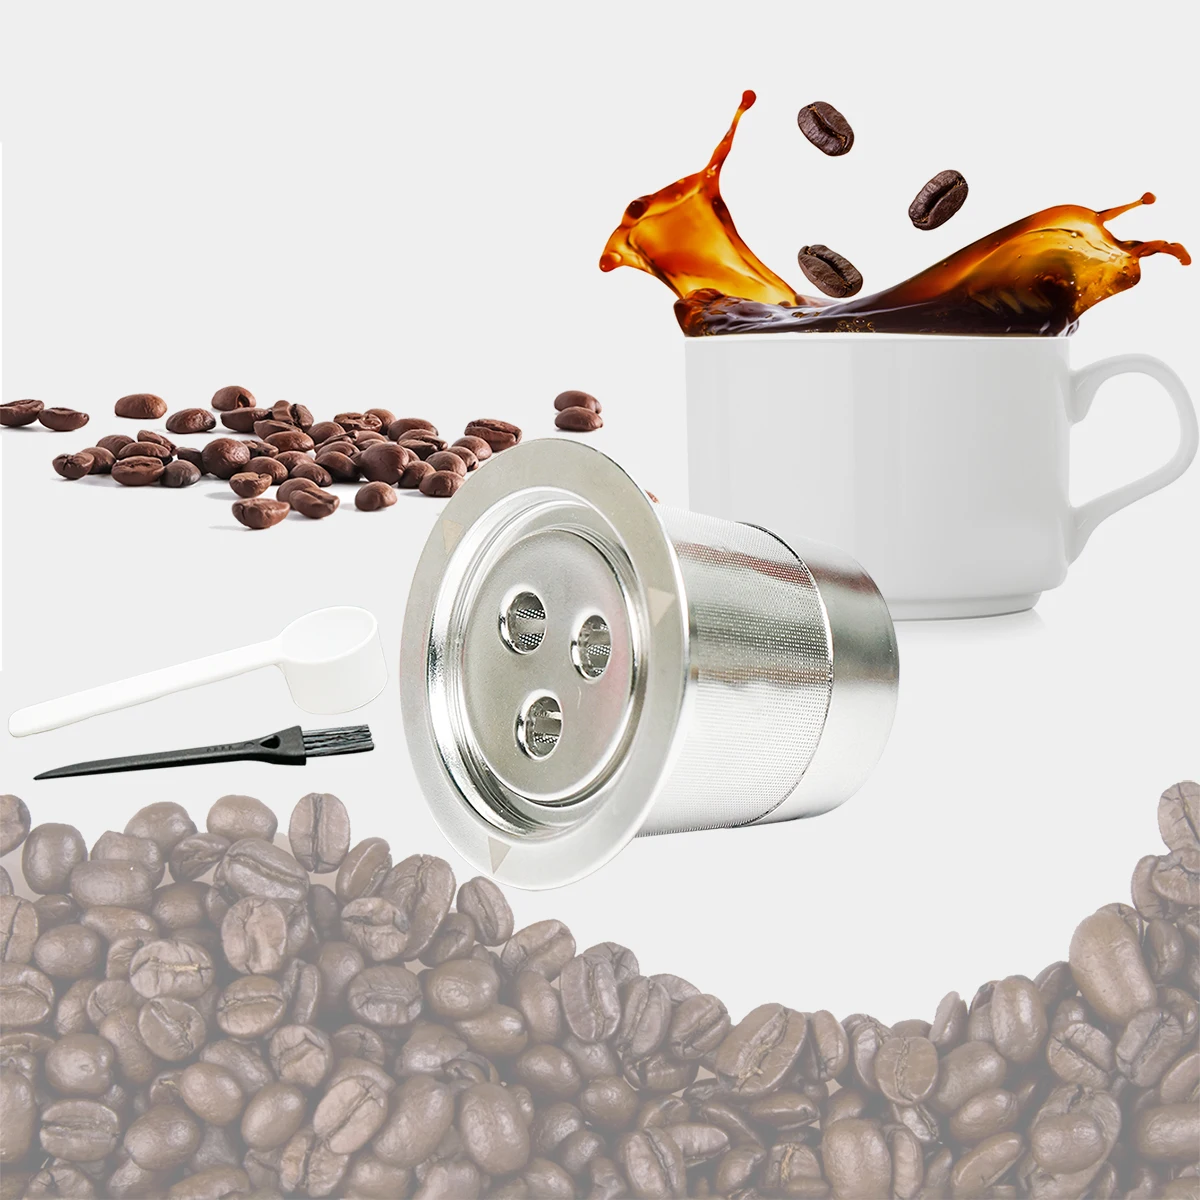 https://ae01.alicdn.com/kf/Scfbe9d55131543a3ad2e5fd1ced5243dz/Reusable-Pods-For-Ninja-Dual-Brew-Coffee-Maker-Stainless-Steel-Reusable-K-Pod-Permanent-K-Cups.jpg